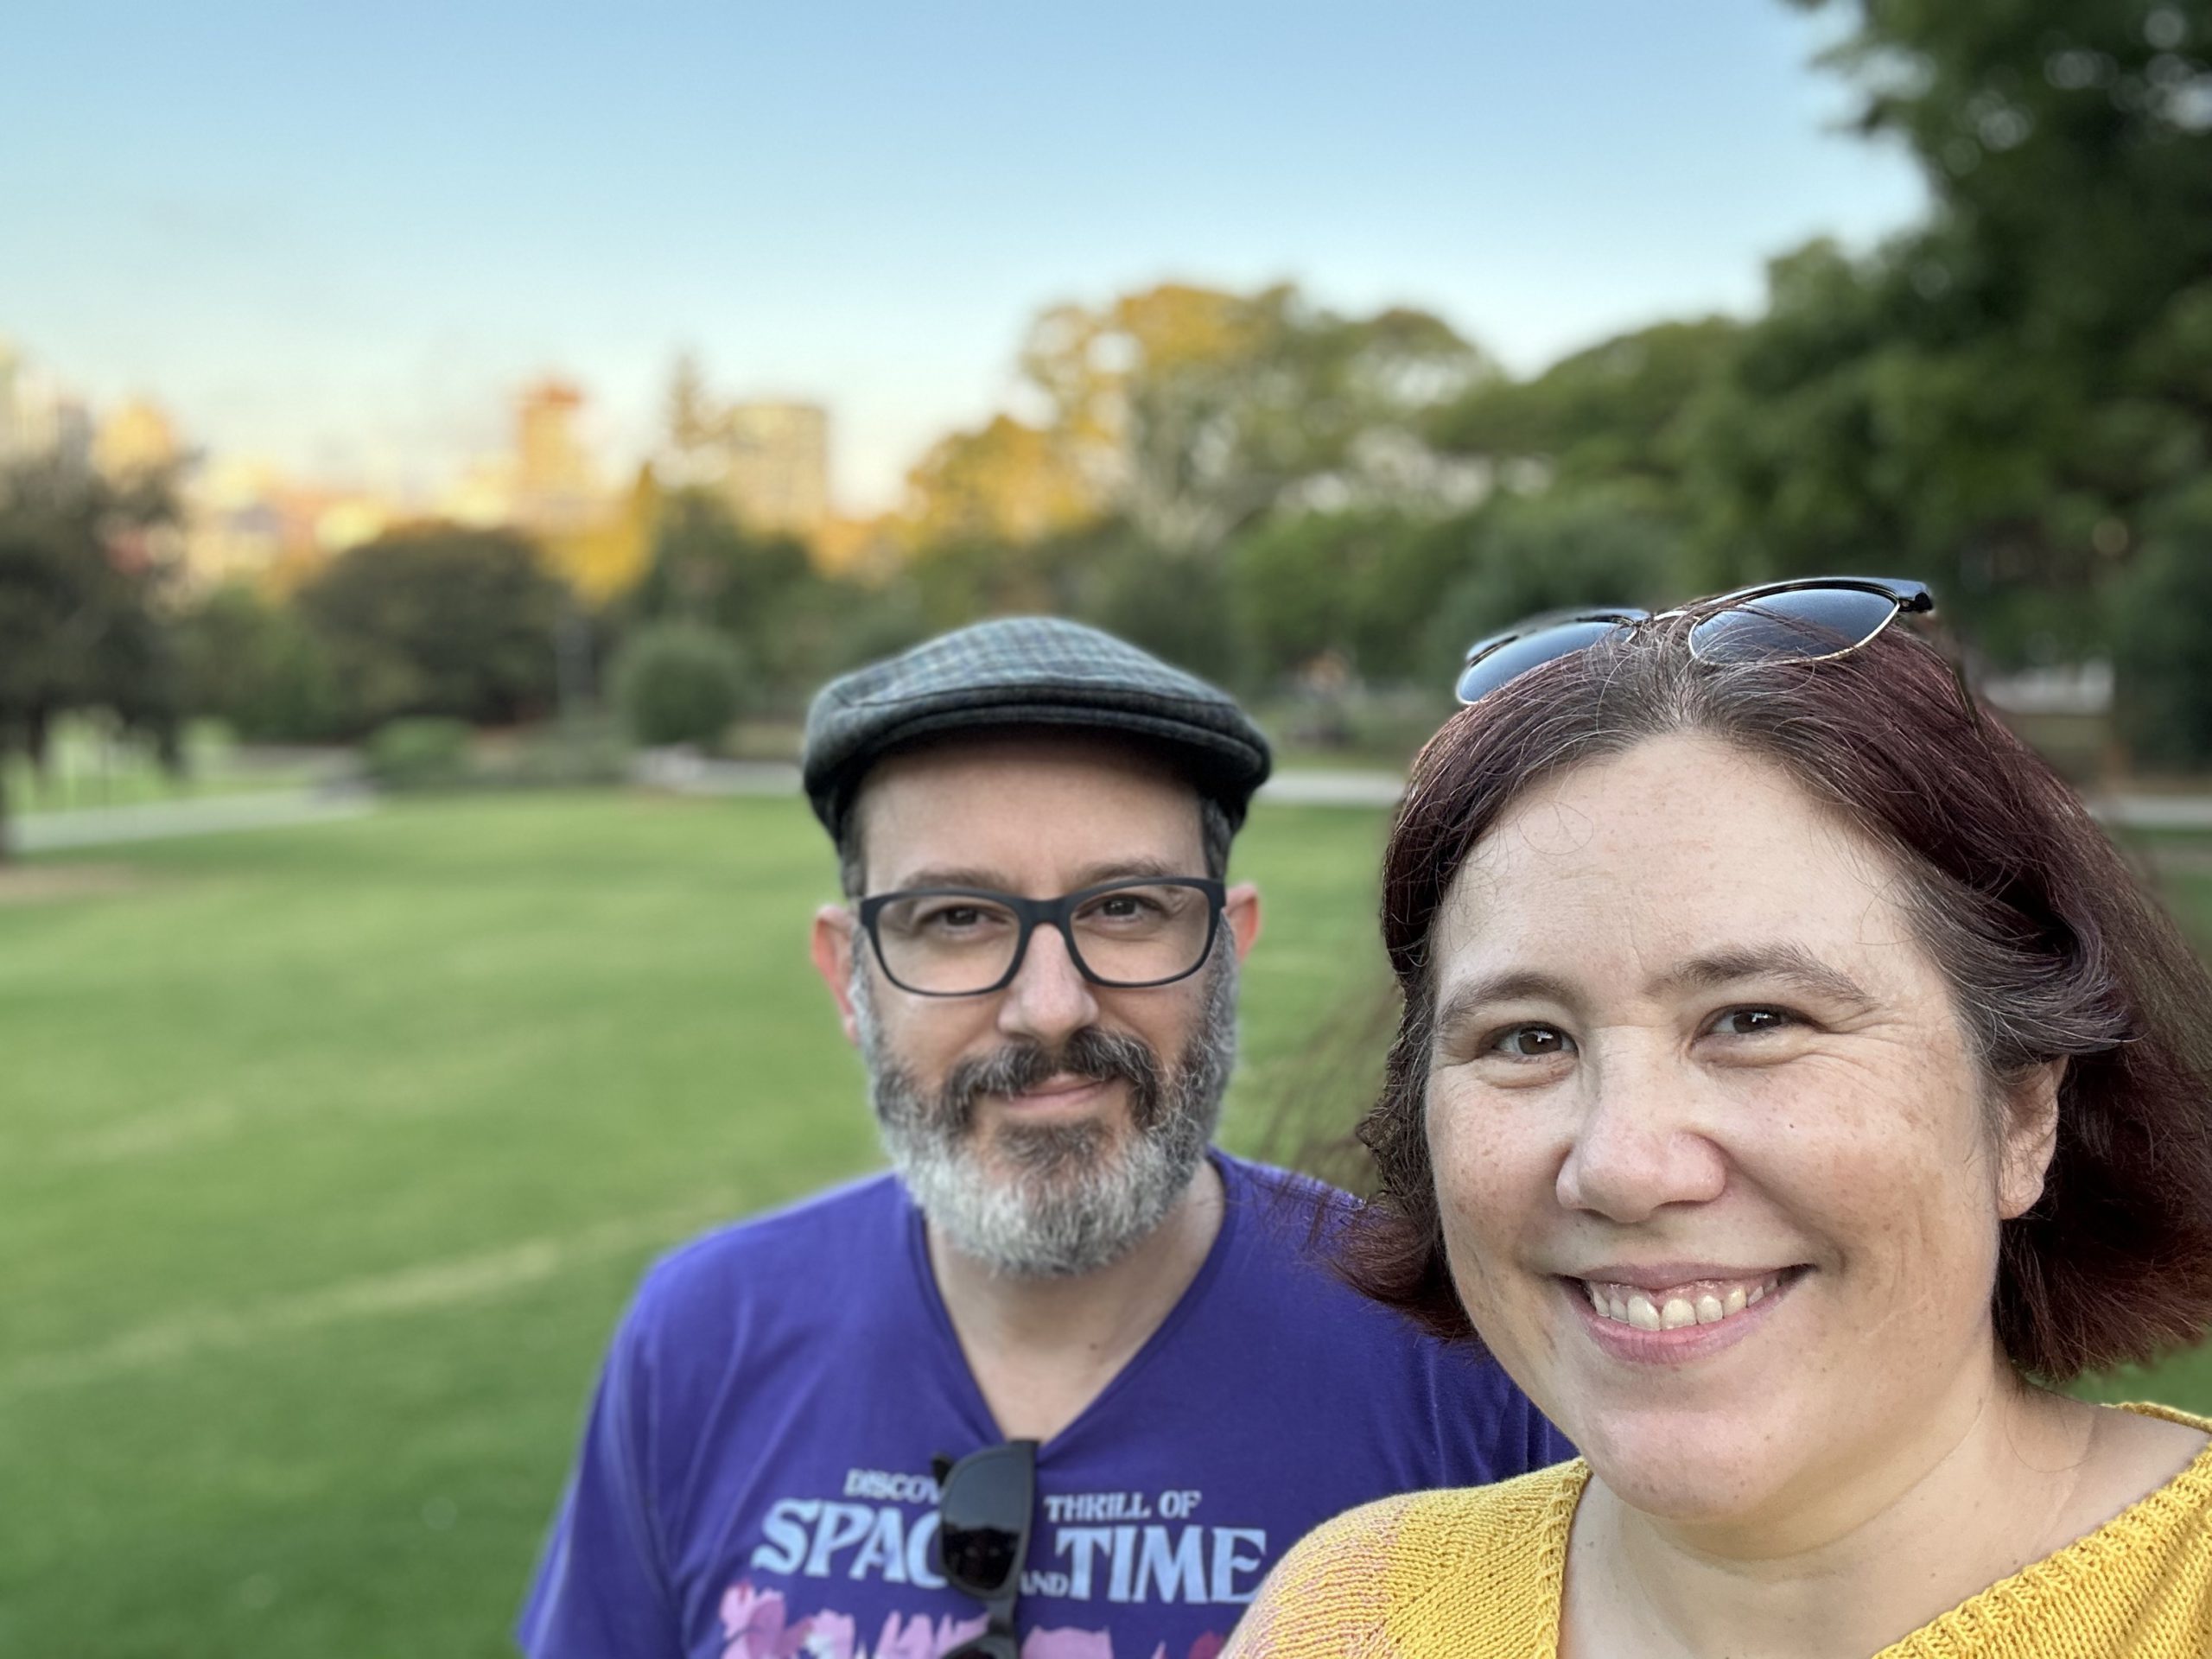 Together in Sydney